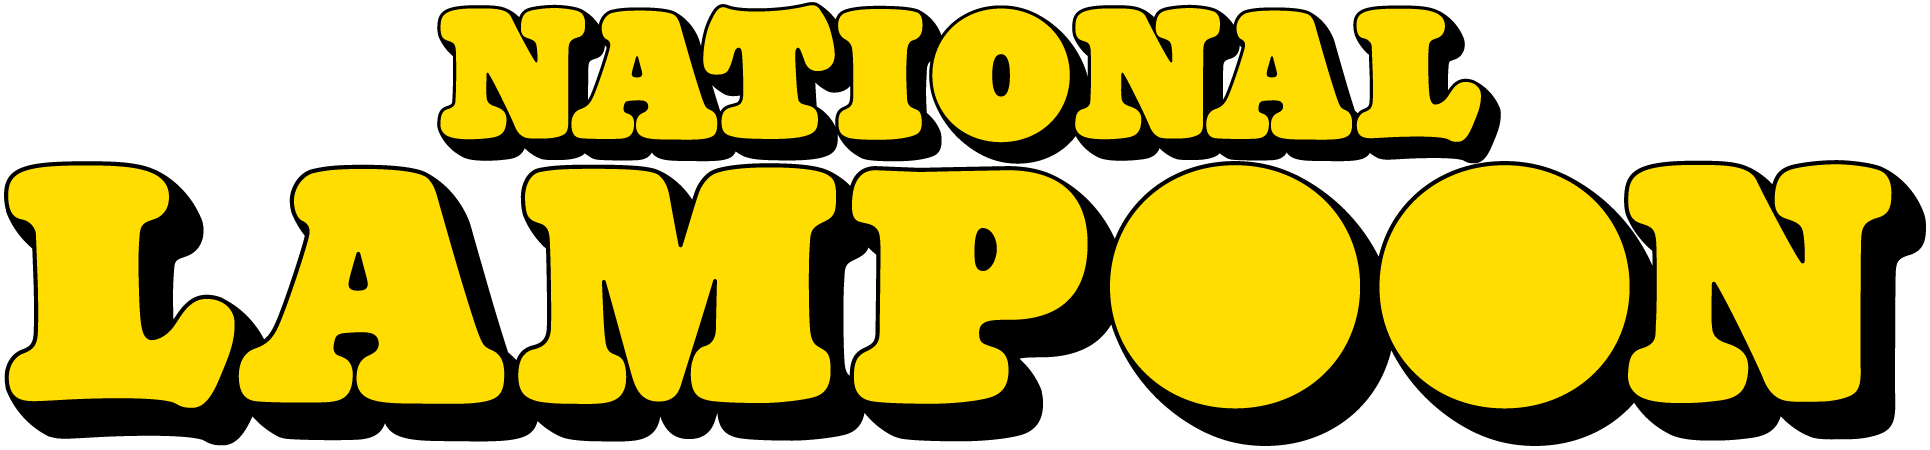 National-lampoon-original-logo.png